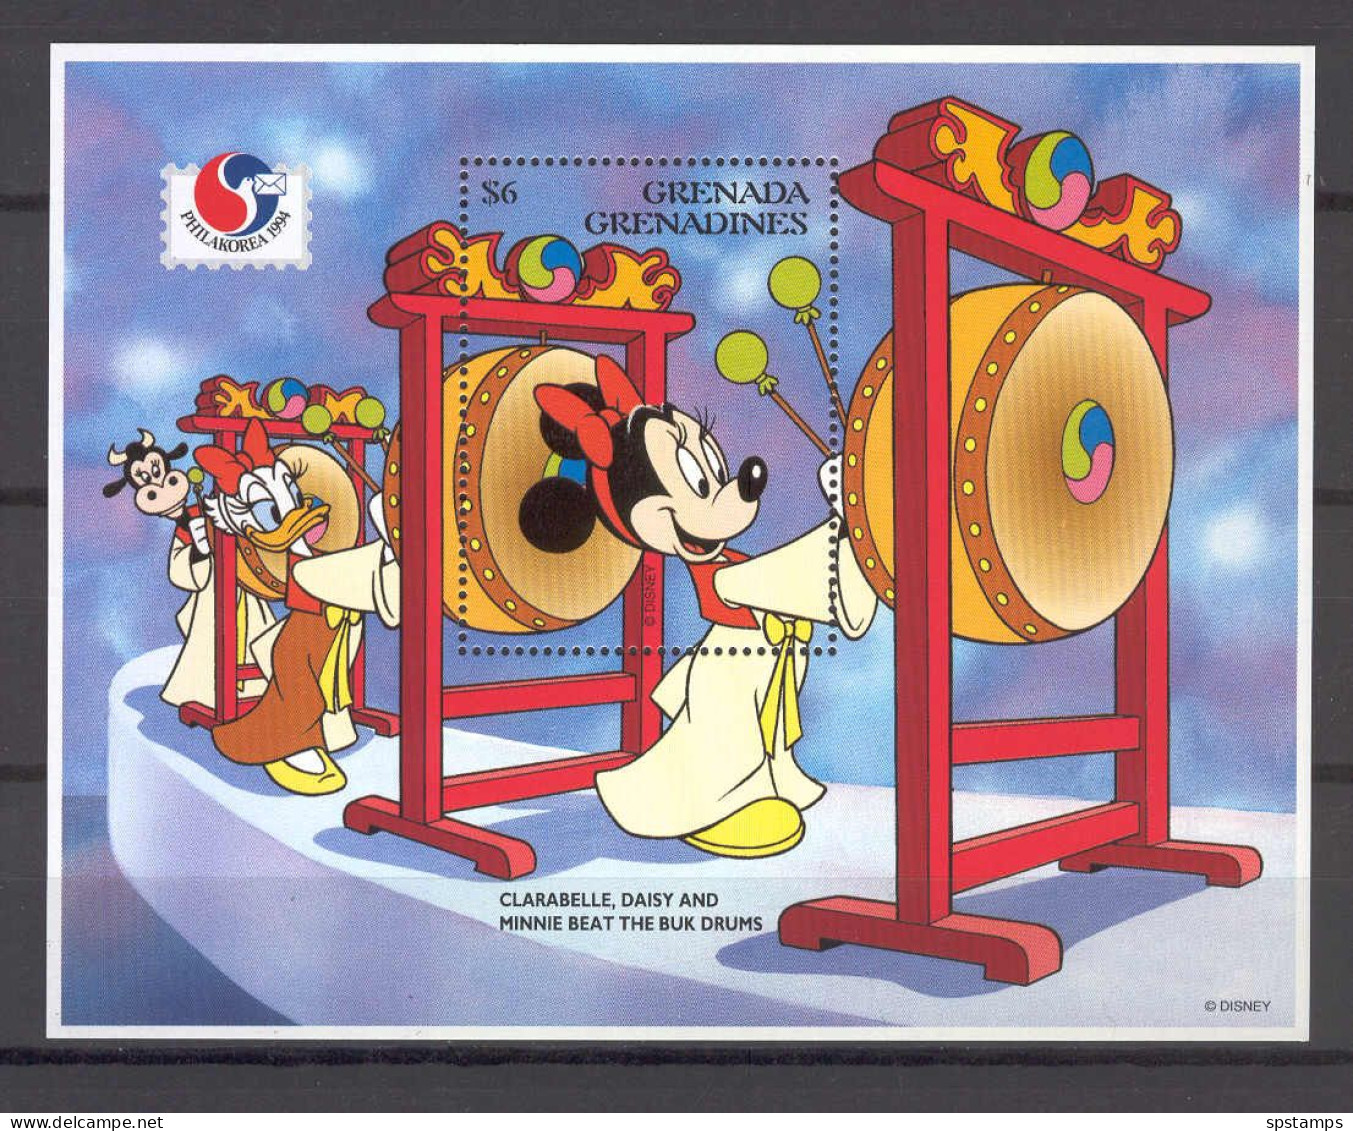 Disney Grenada Gr 1994 PhilaKorea MS #1 MNH - Disney